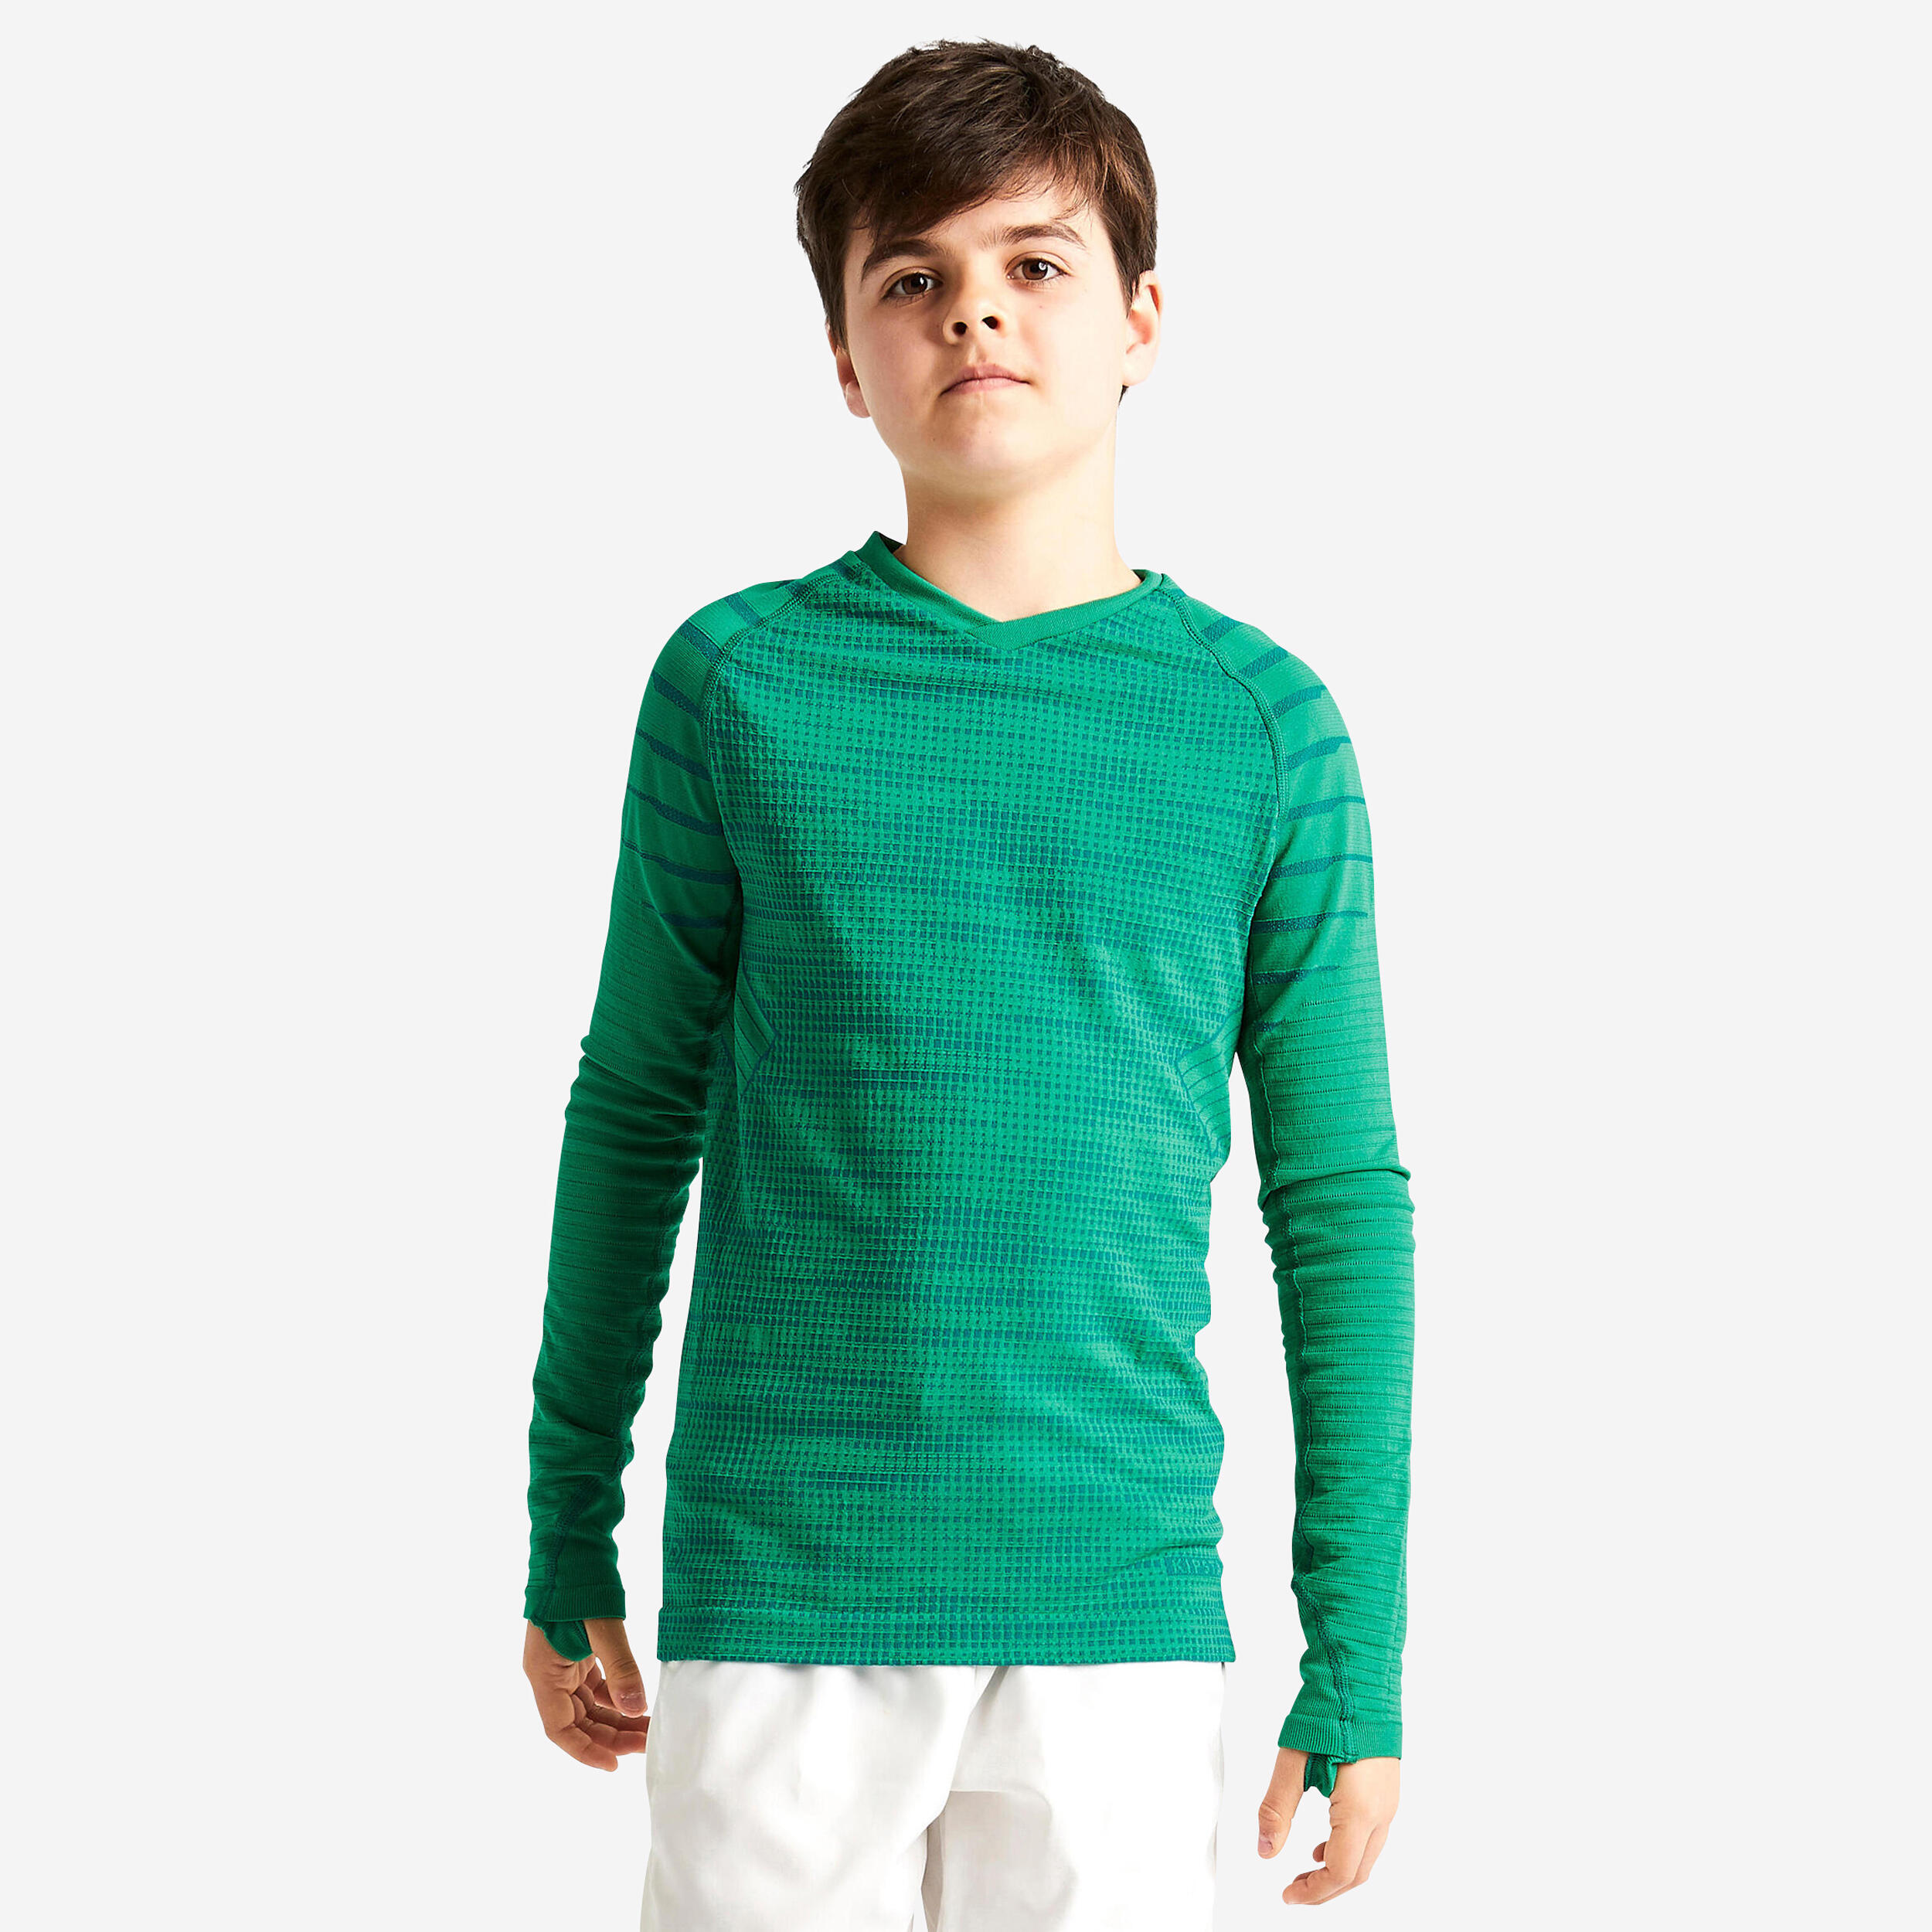 Kids' Long-Sleeved Thermal Base Layer Top Keepdry 500 - Green 1/10